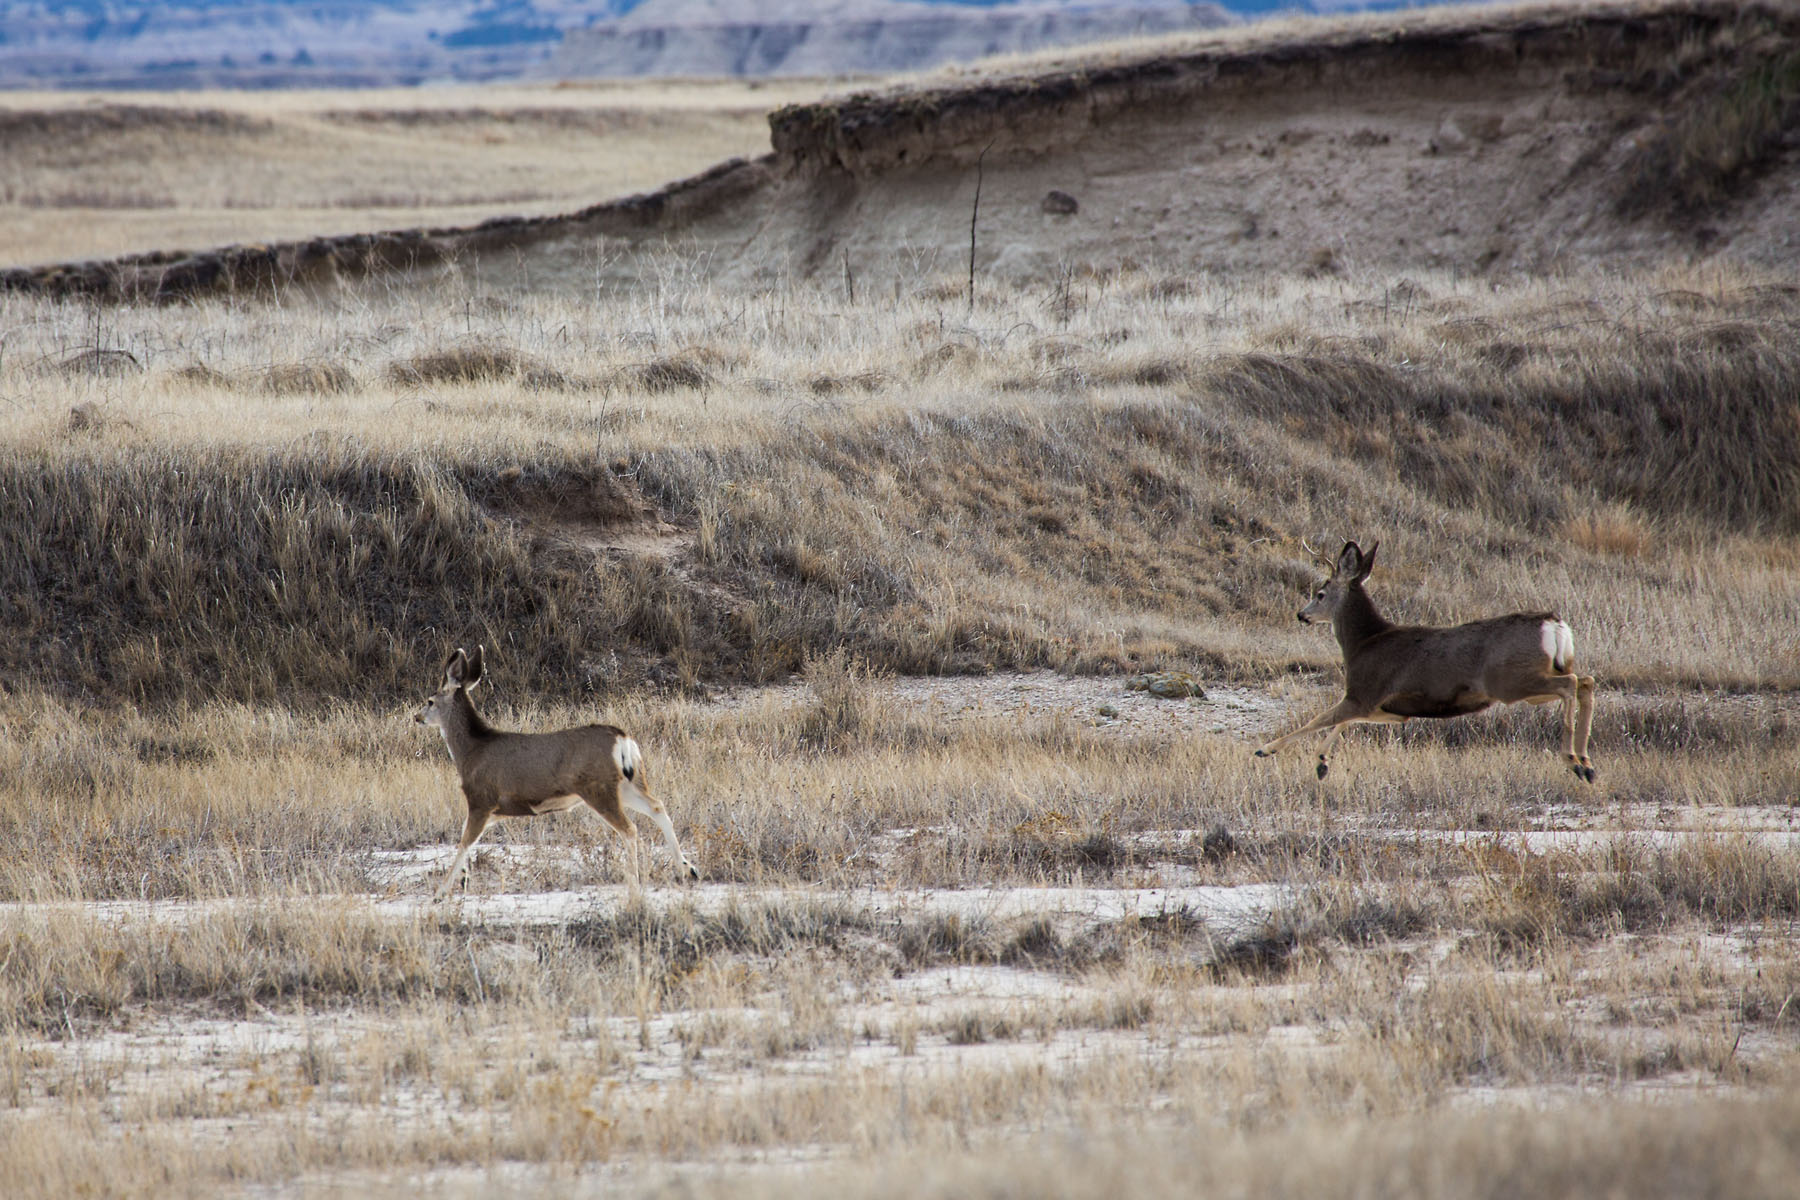 Deer, Badlands National Park, South Dakota.  Click for next photo.